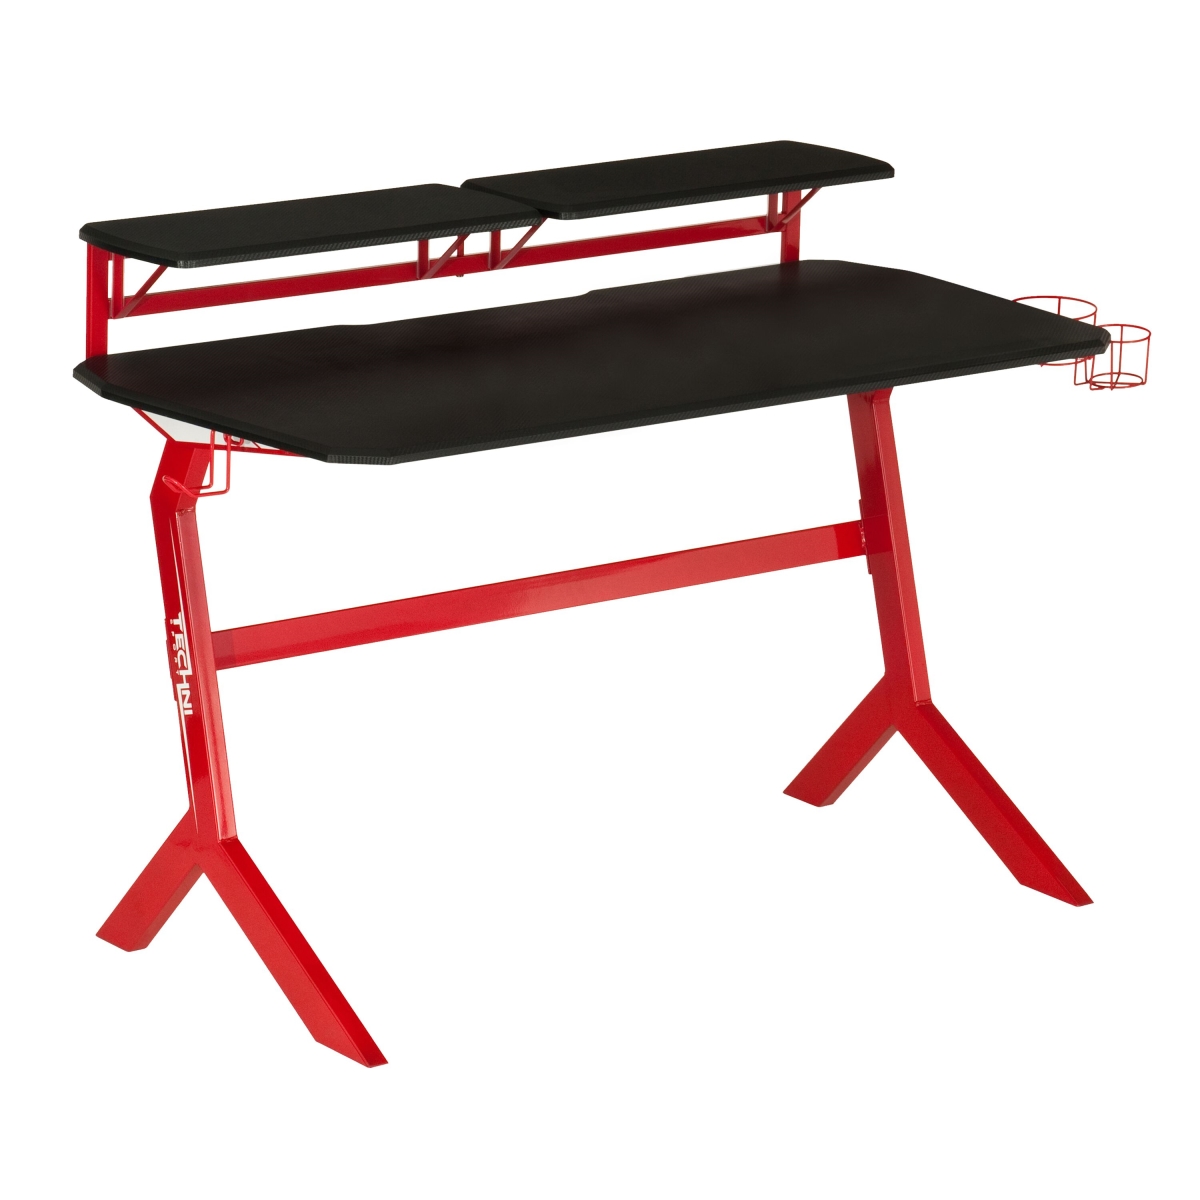 Rta-ts201-red Stryker Gaming Desk, Red